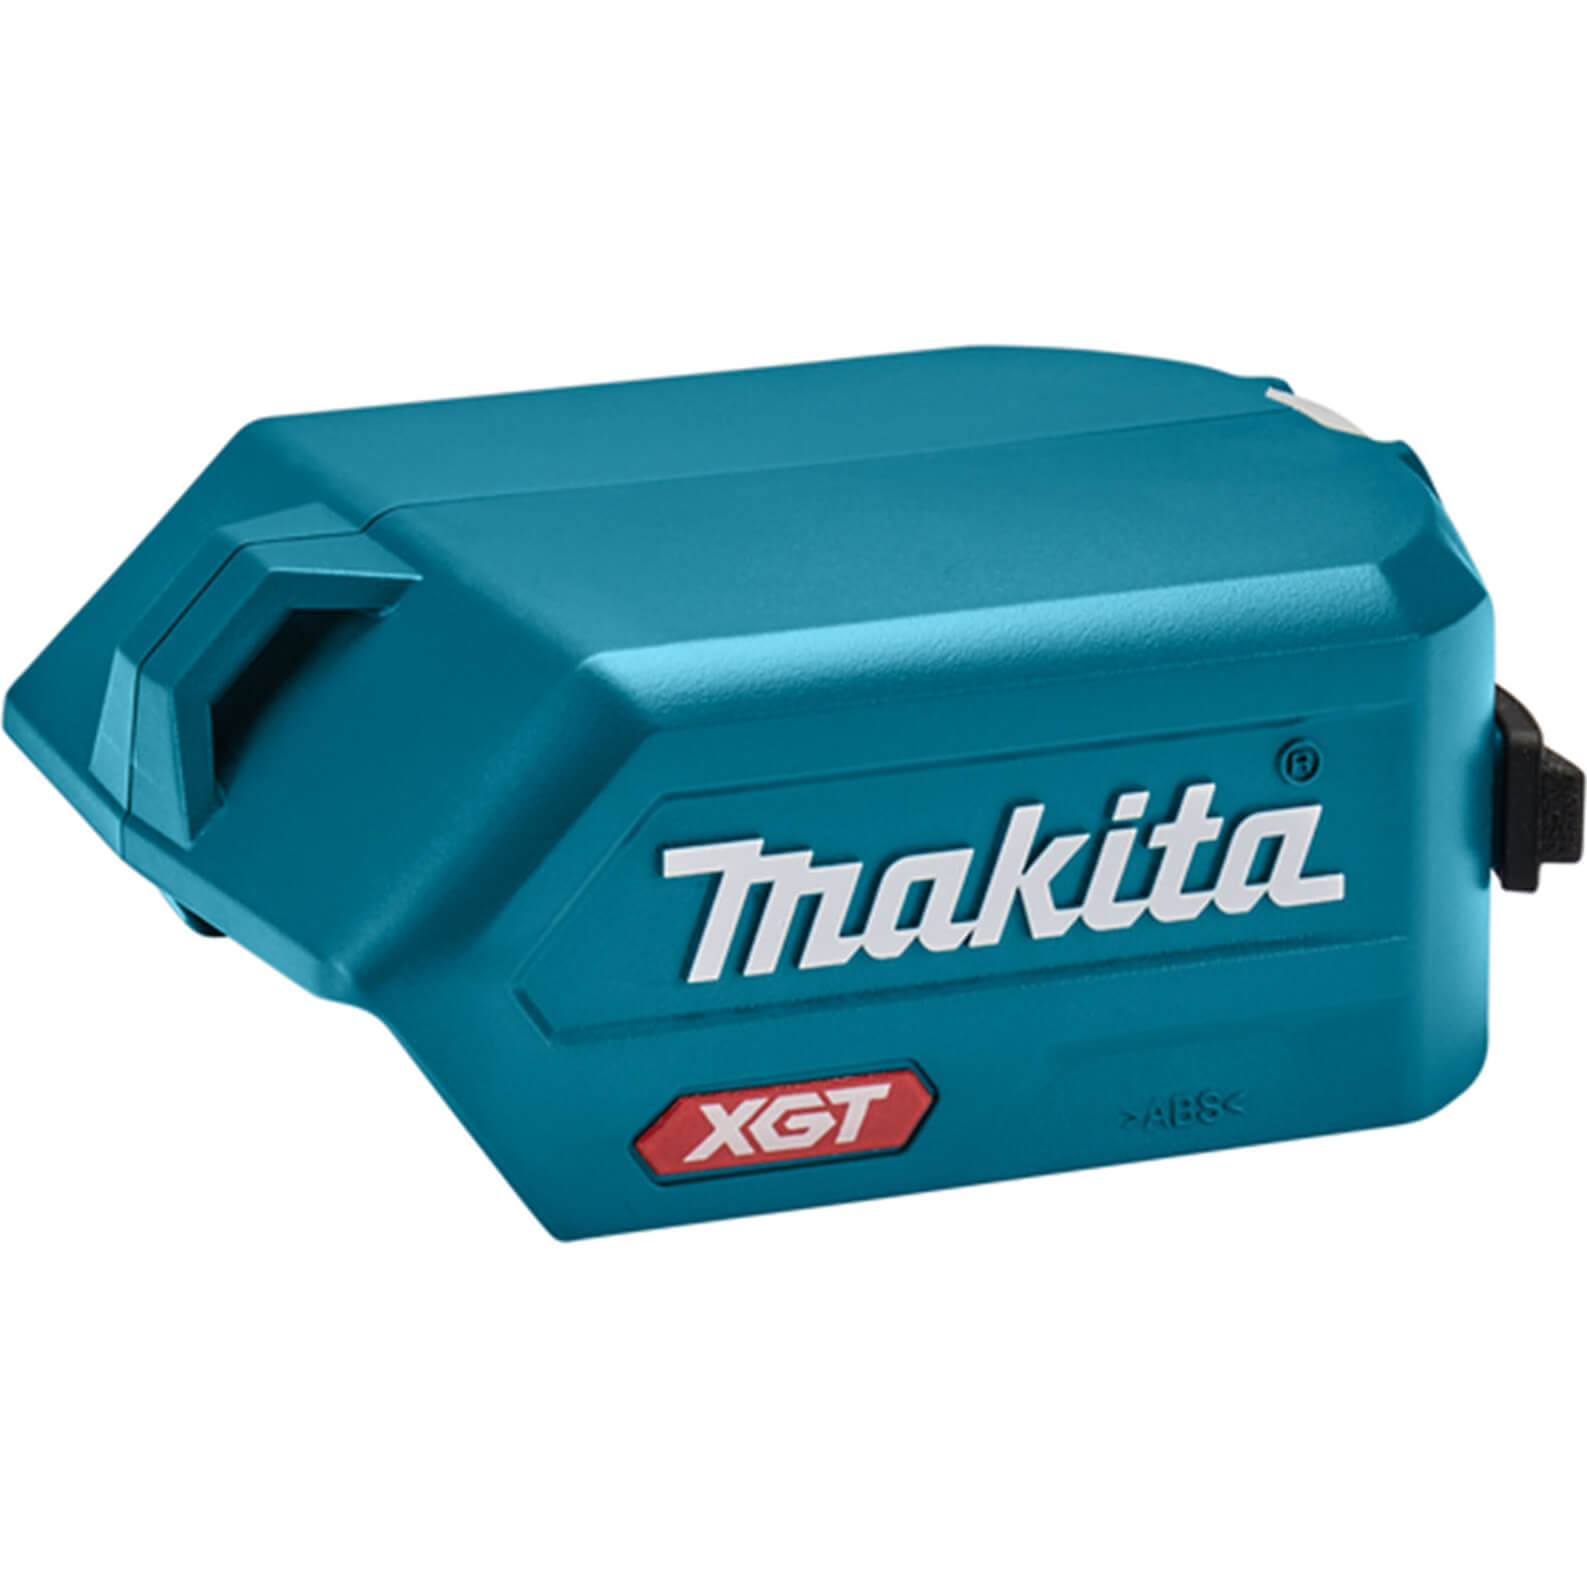 Image of Makita USB Battery Adaptor for 40v Max XGT Batteries